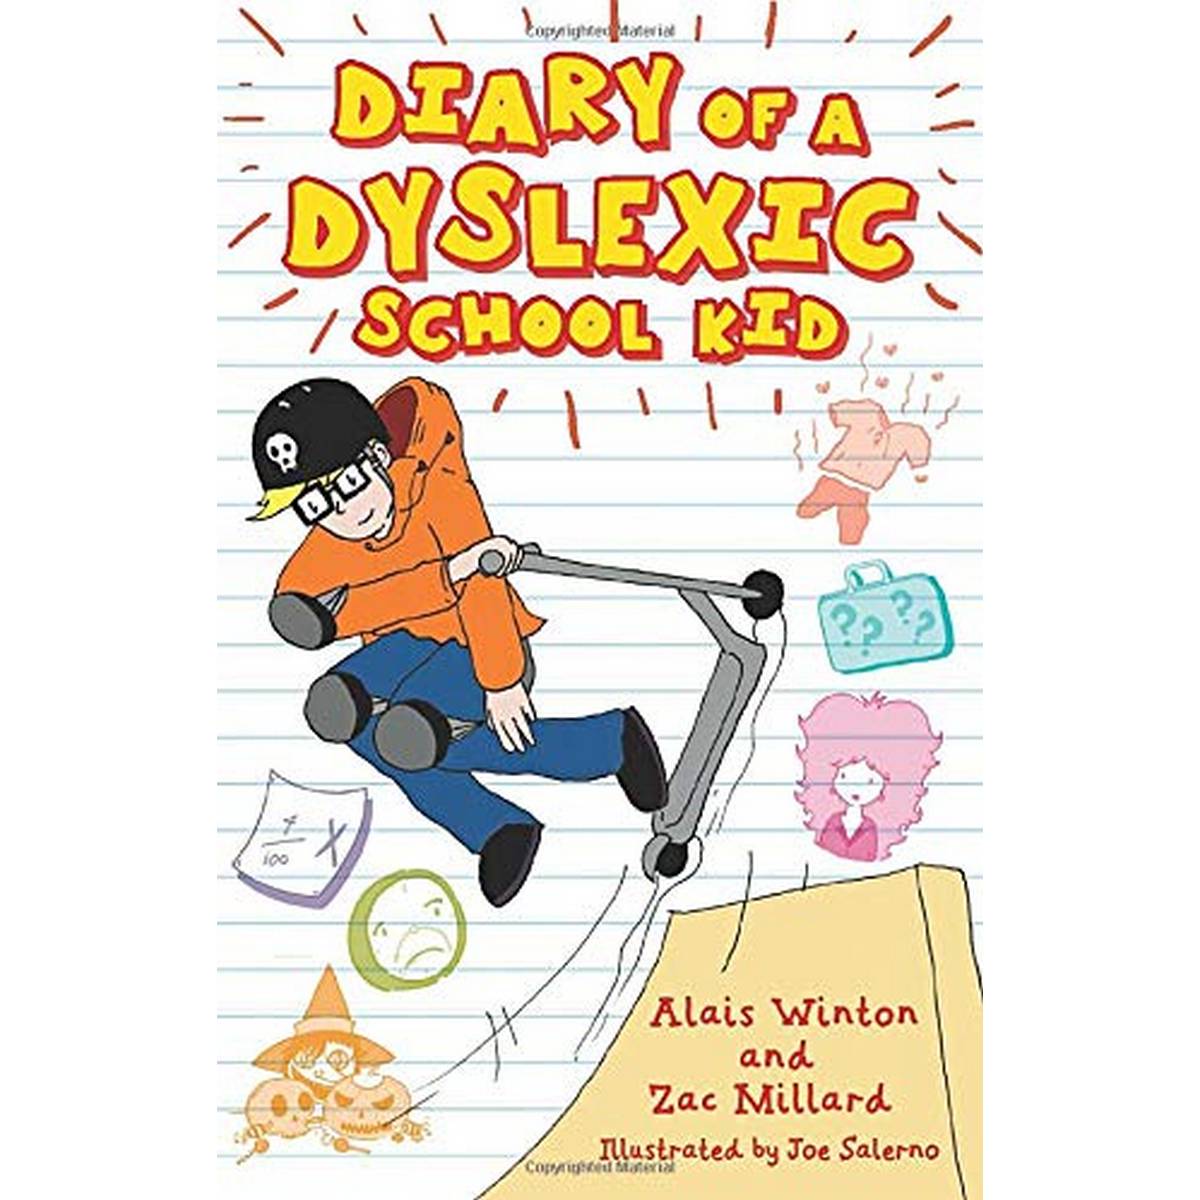 Diary of a Dyslexic School Kid